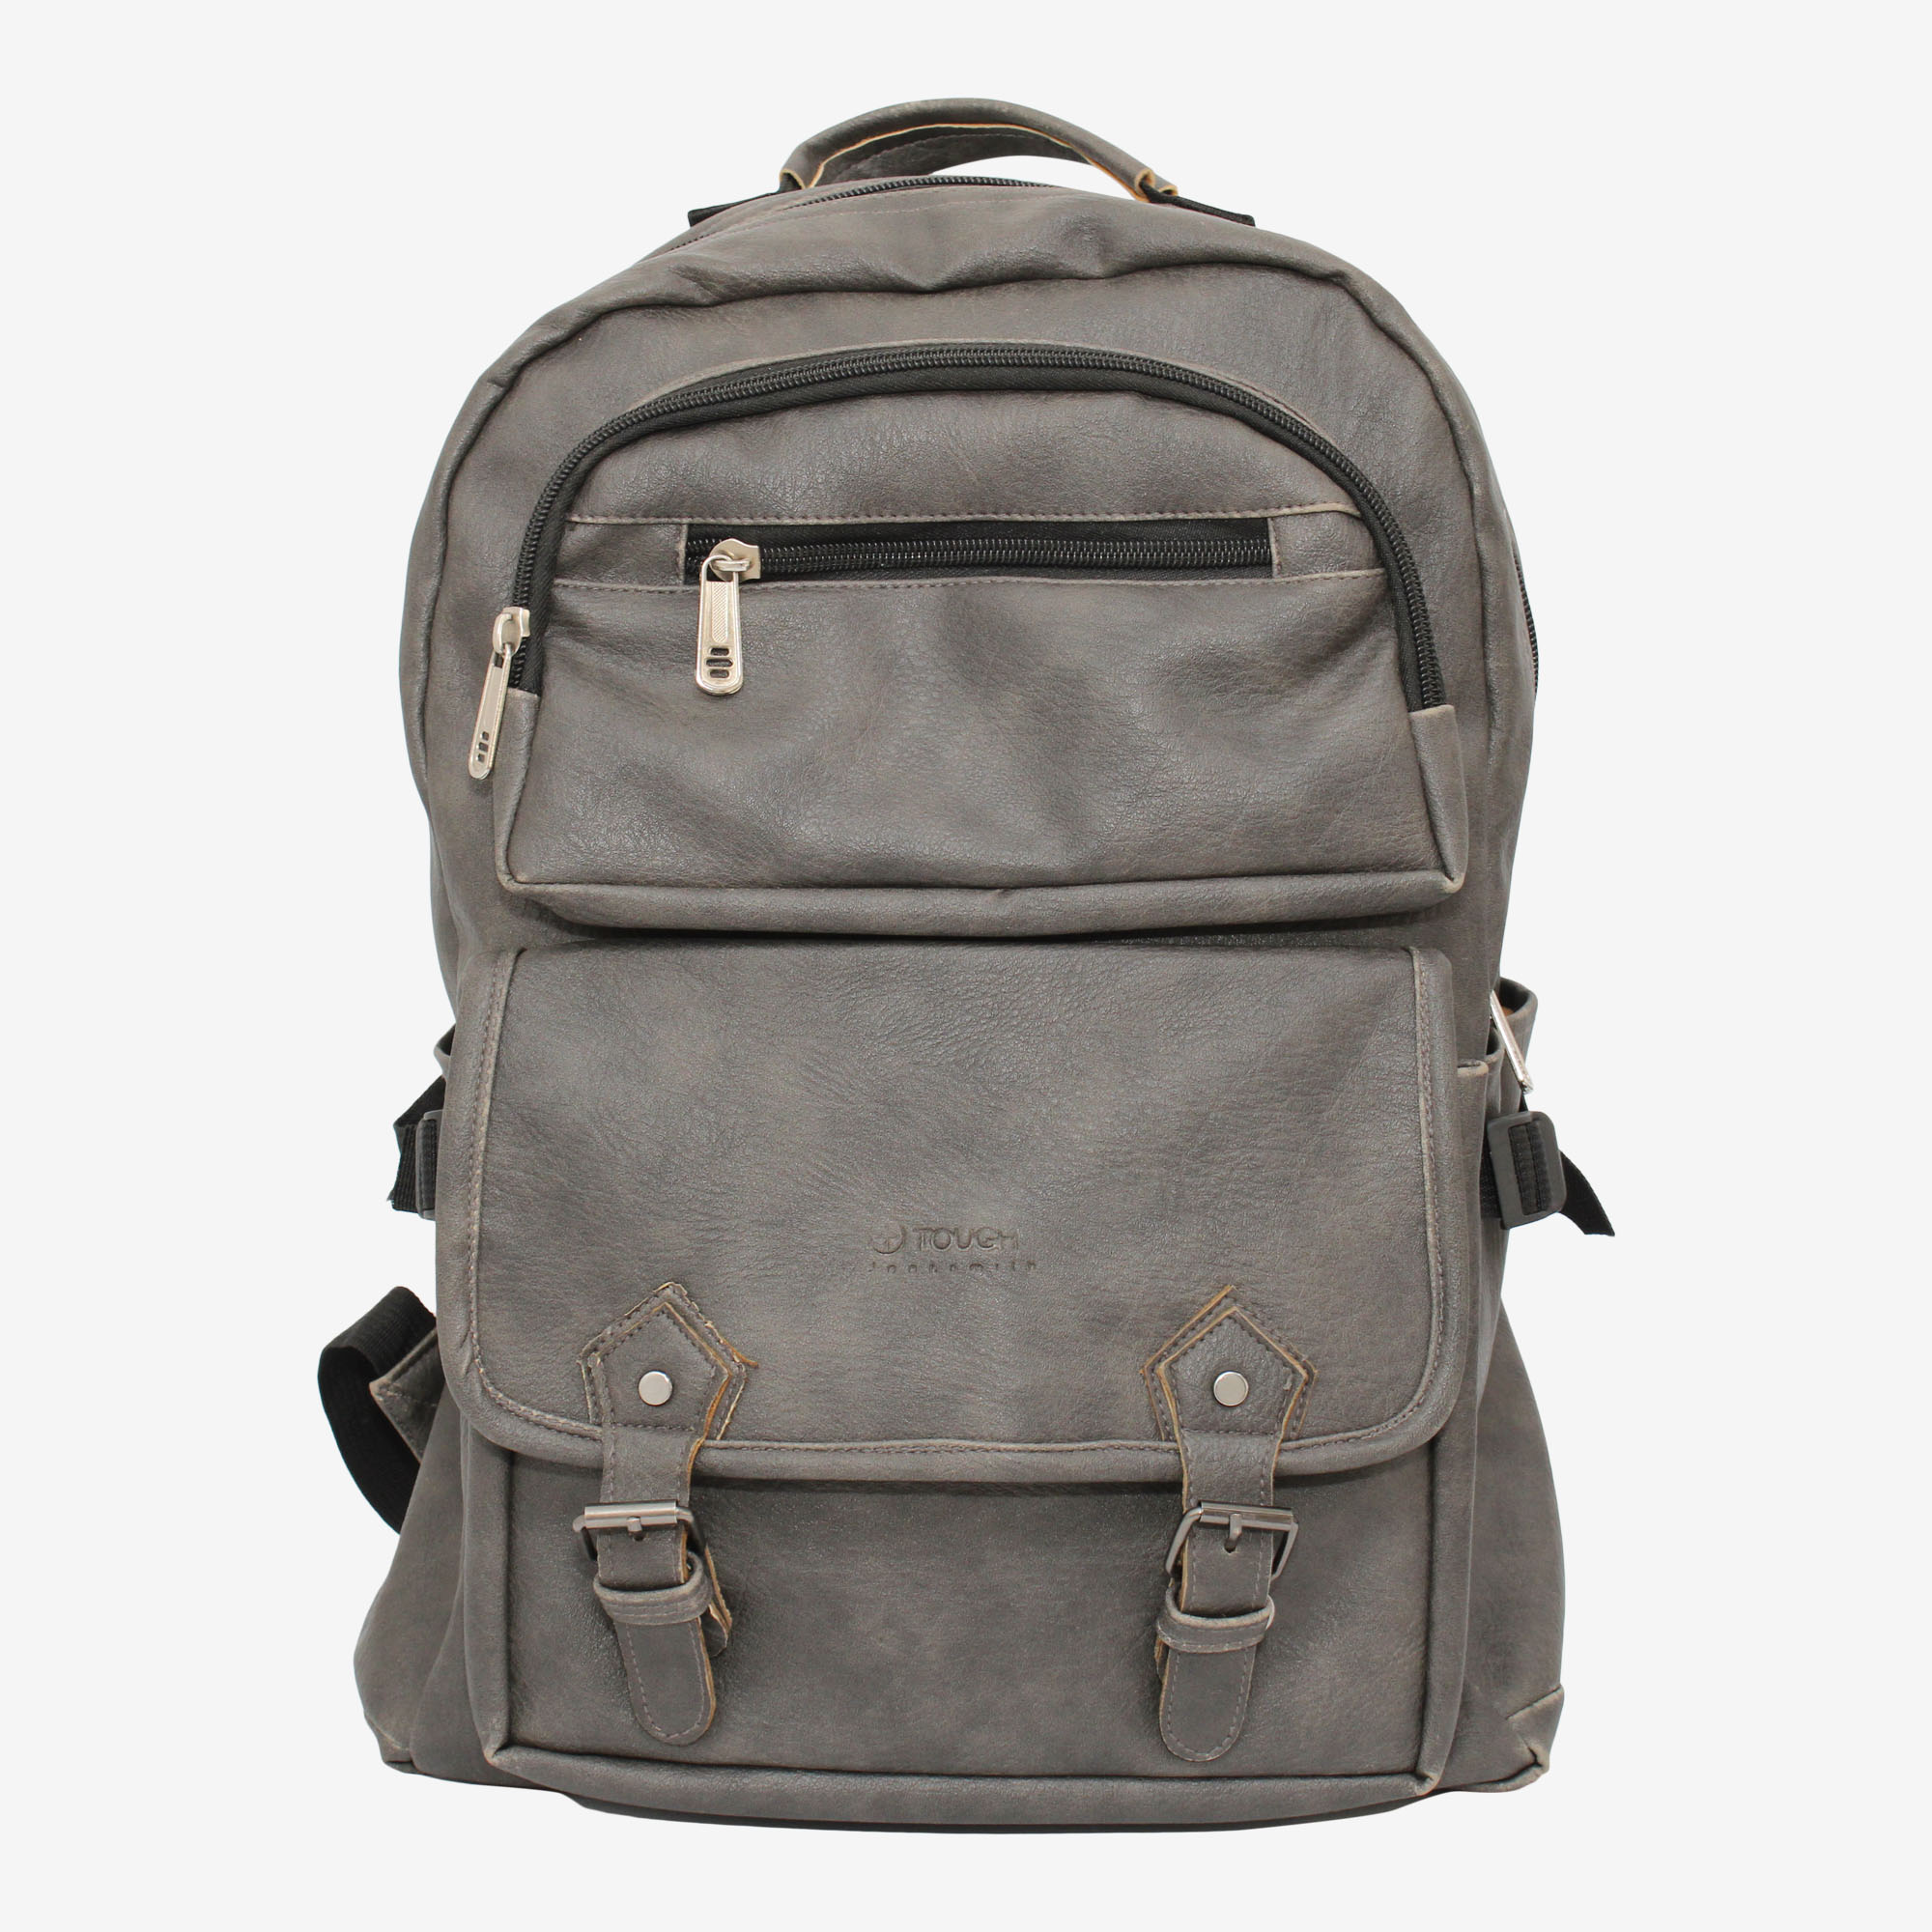 Grey Leather School College Laptop Backpack Bookbag for Men Women